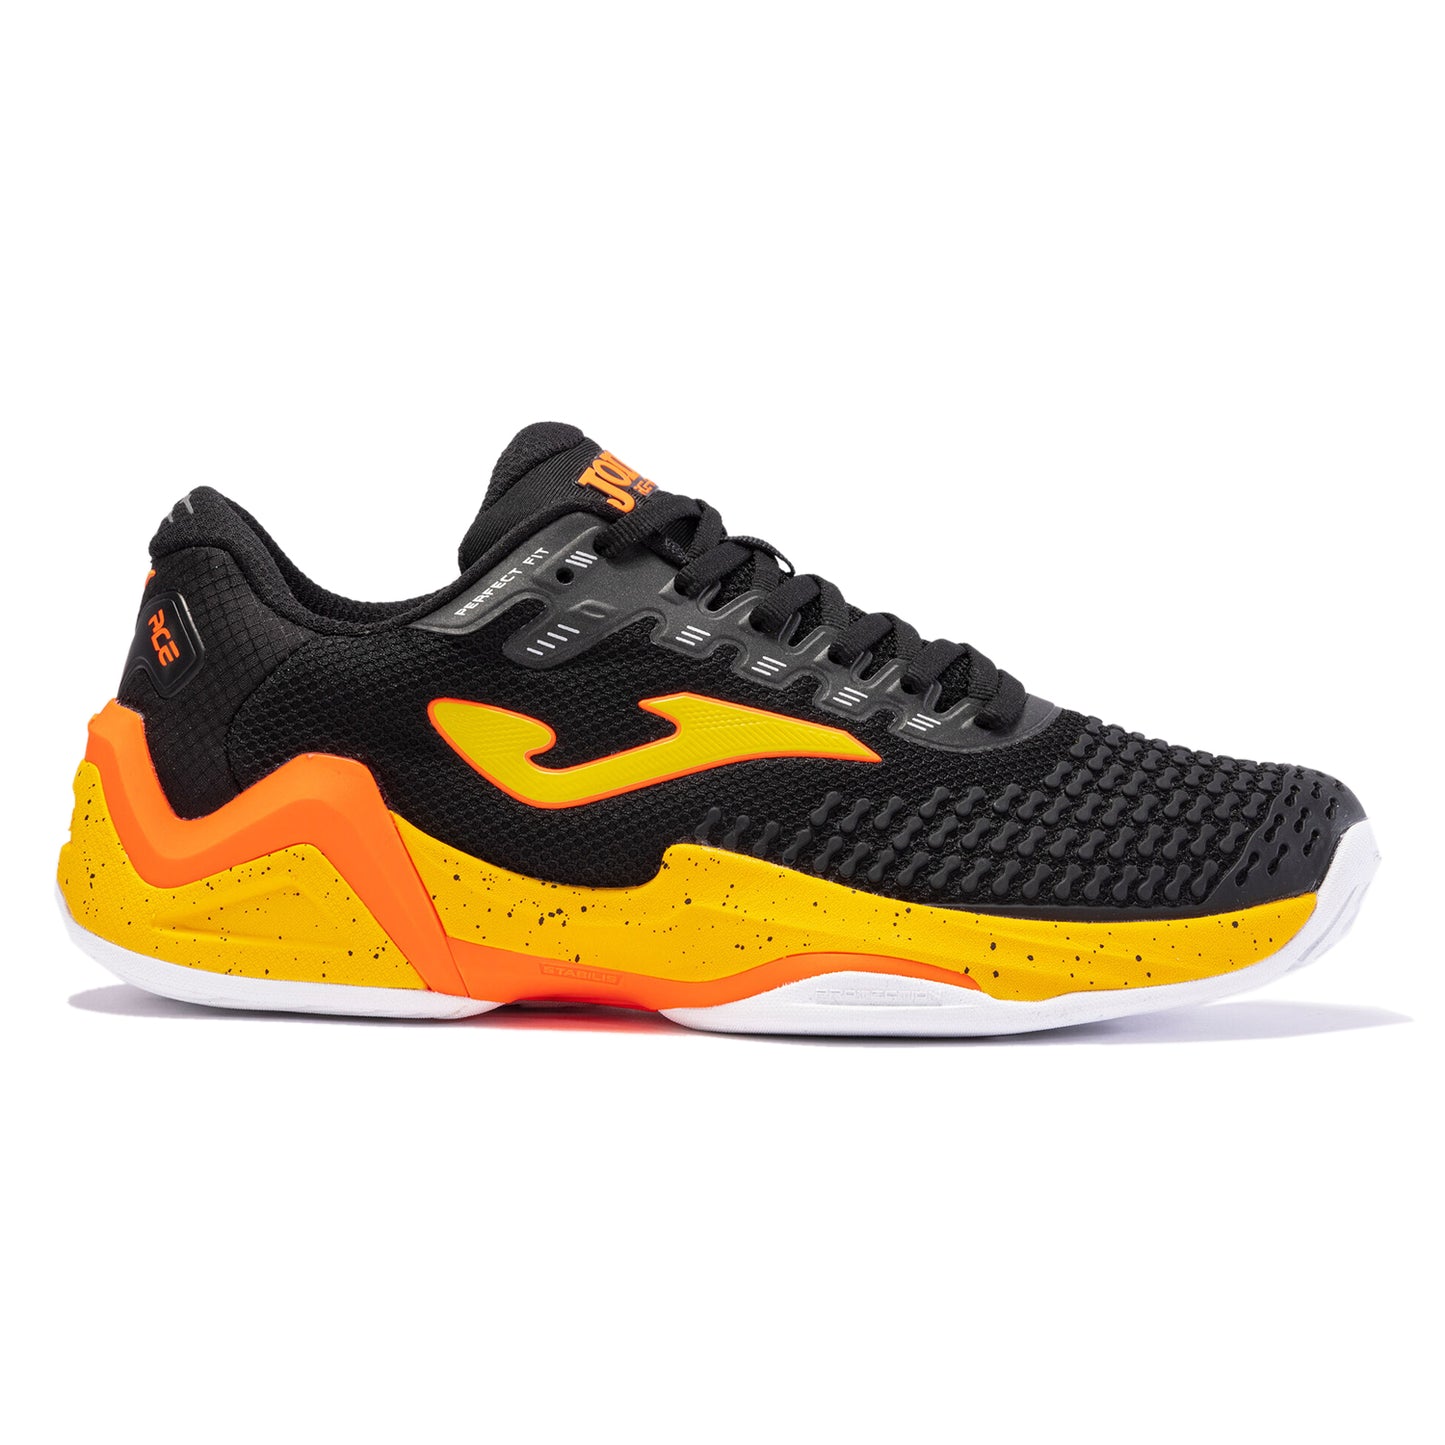 Joma T Ace 2301 Men's Tennis Shoe - Best Price online Prokicksports.com